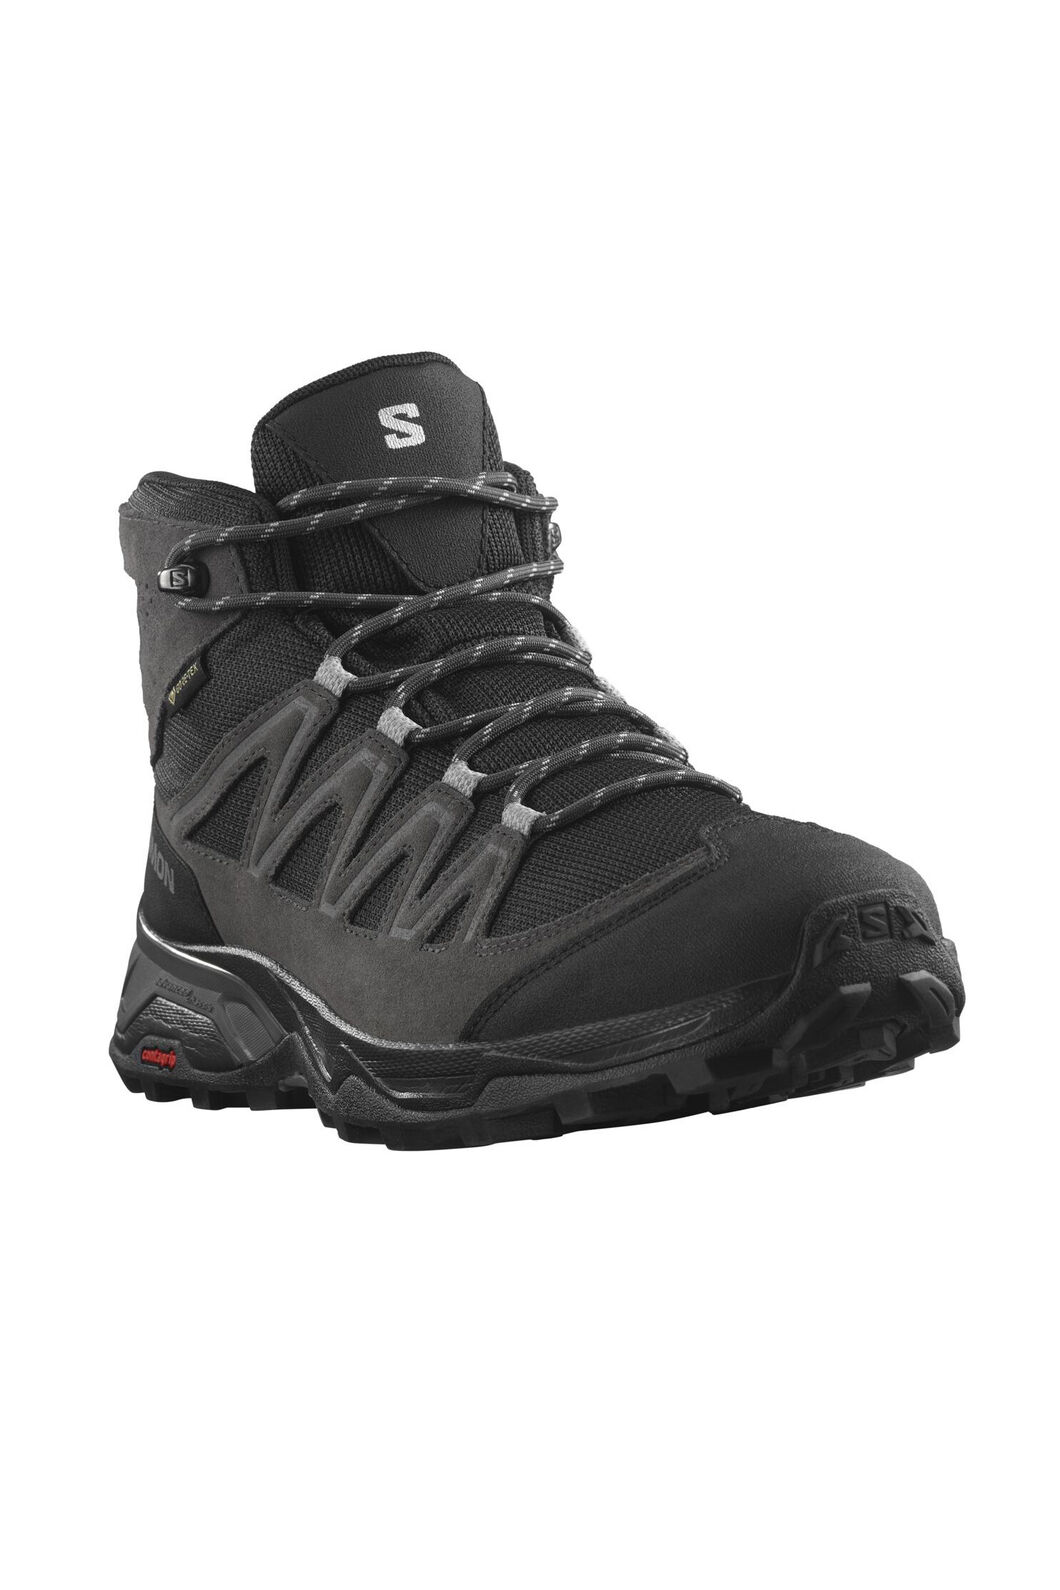 Salomon Men's X Ward Leather GTX Mid Hiking Boots